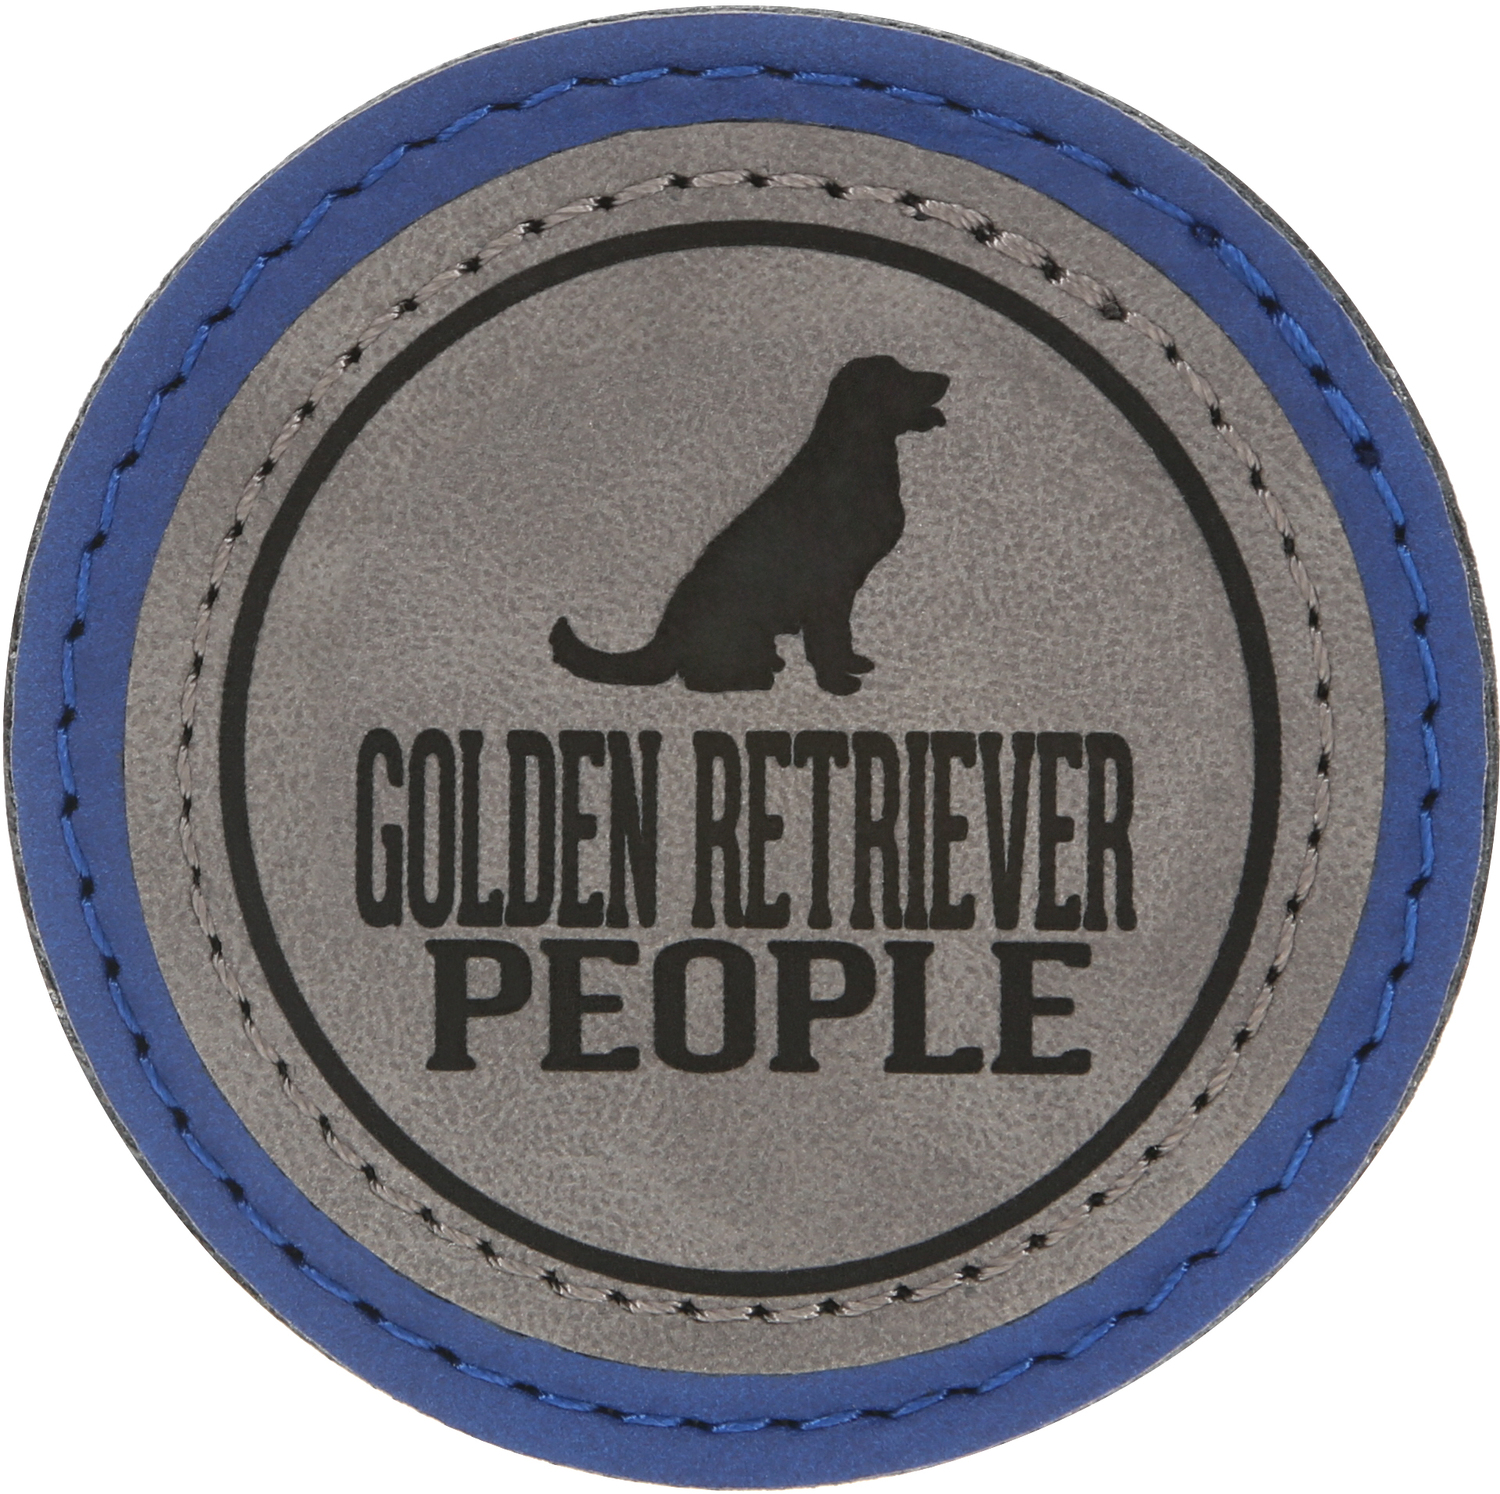 Golden Retriever People by We Pets - Golden Retriever People - 2.5" Magnet